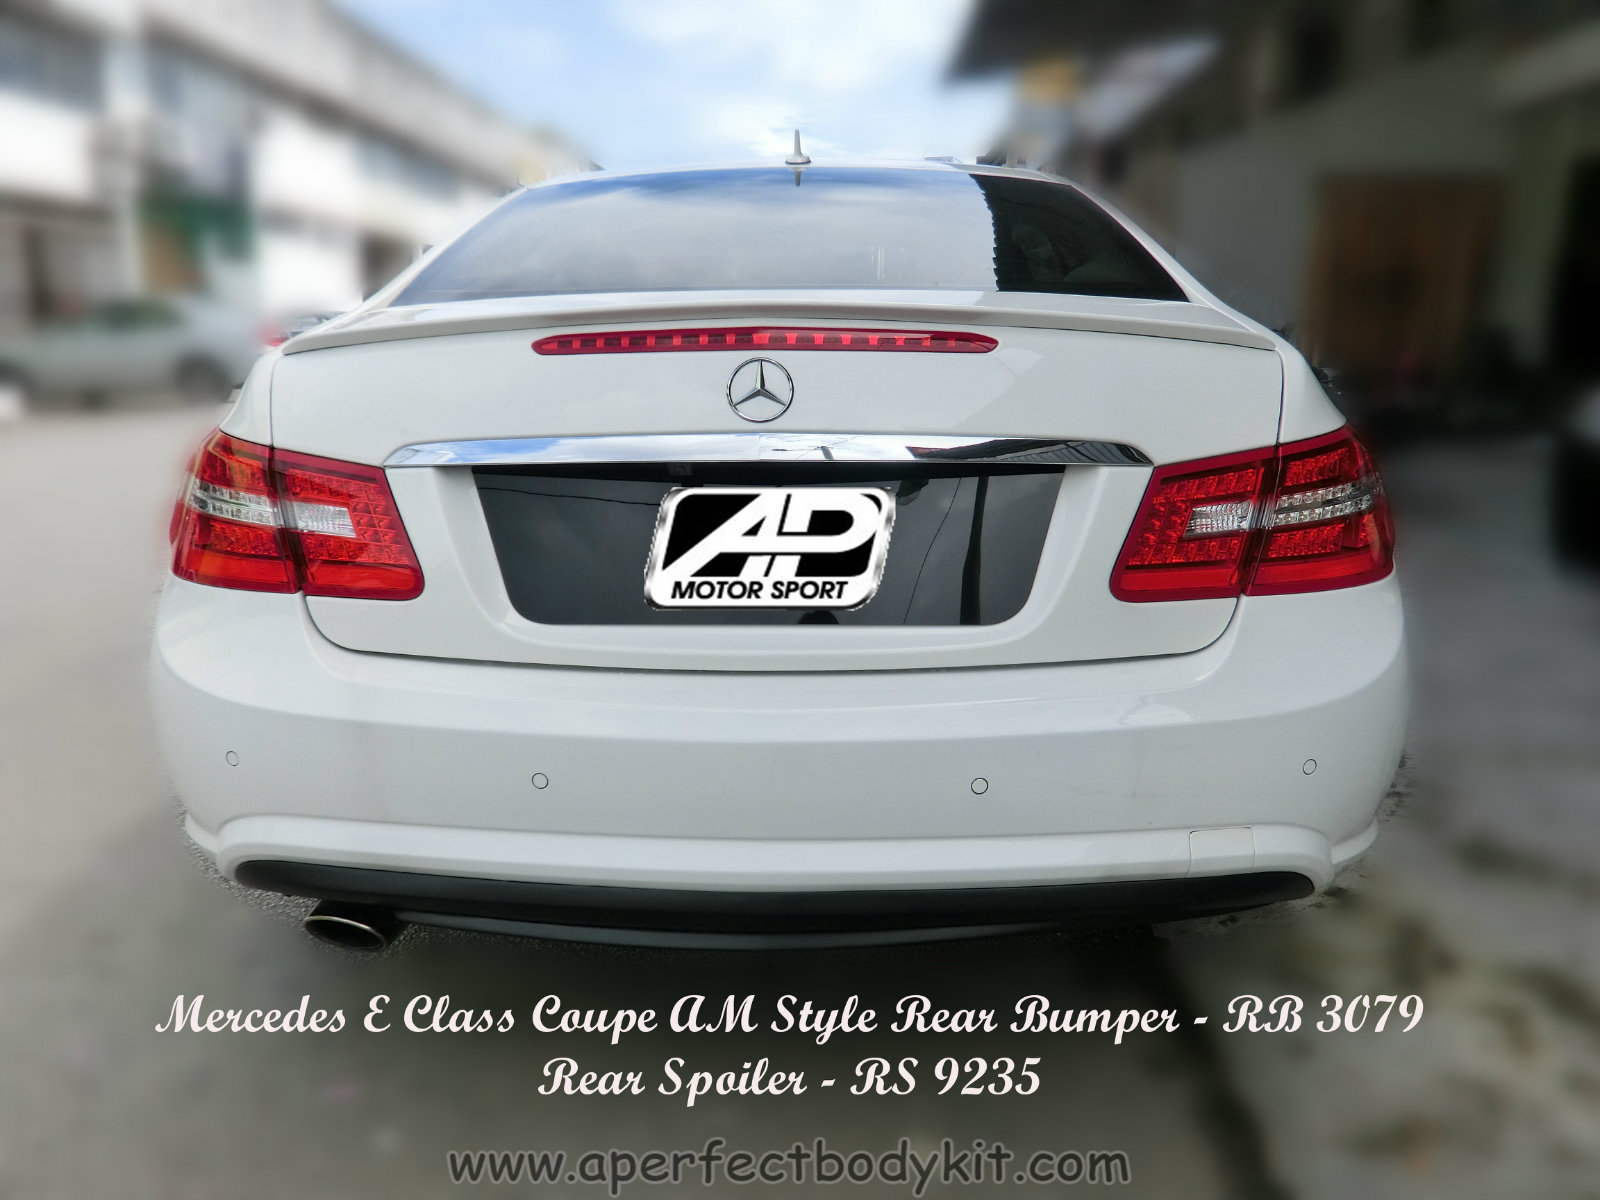 Mercedes E Class Coupe AM Style Rear Bumper & Rear Boot 